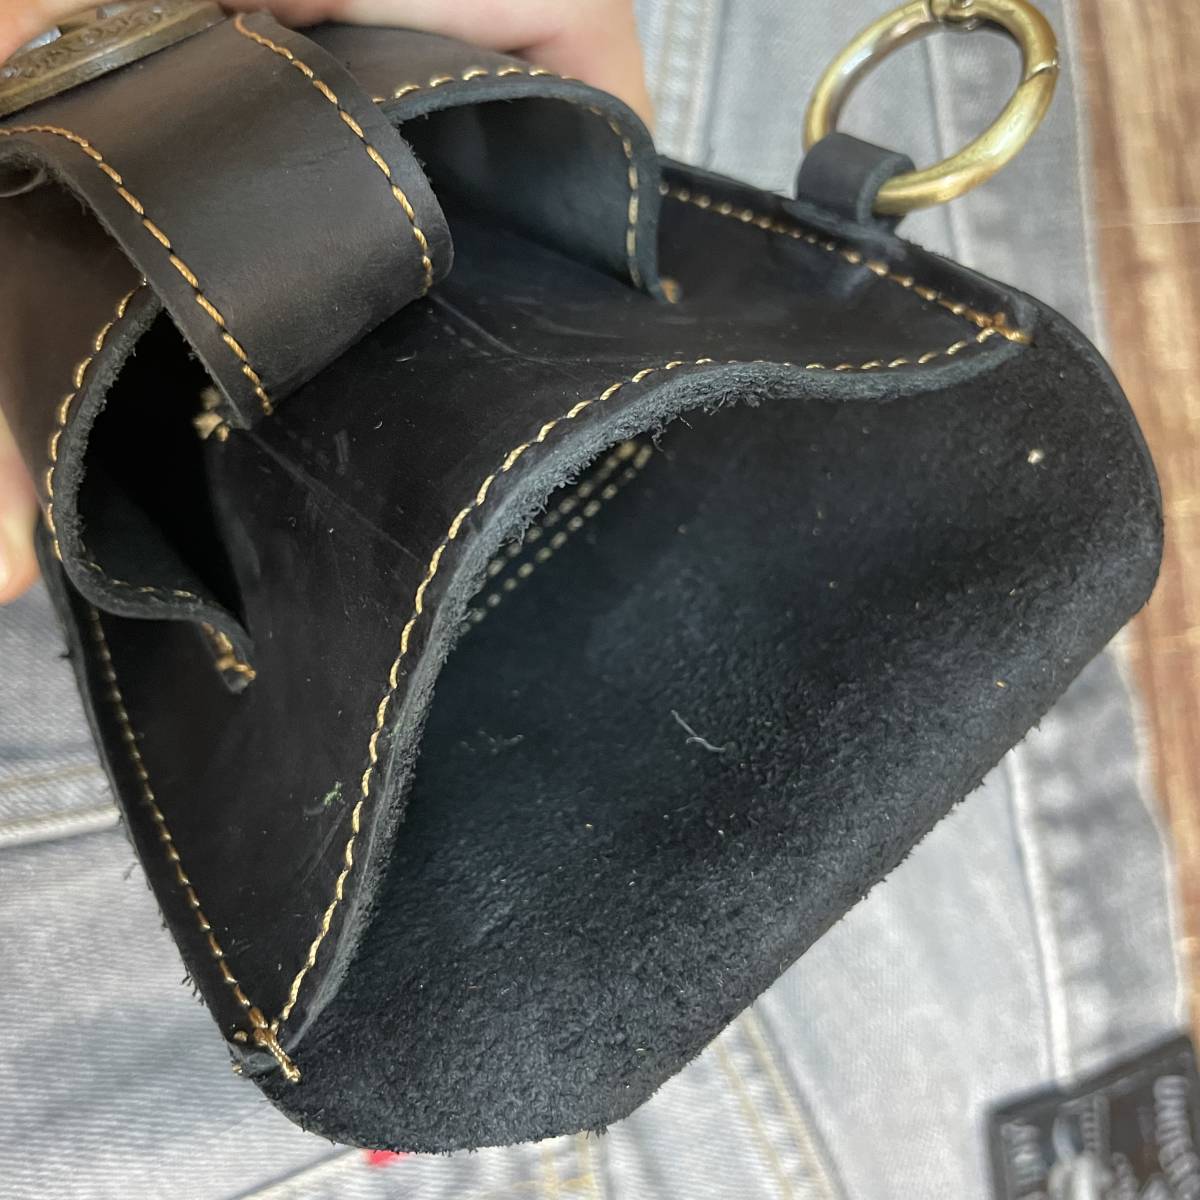  new goods original leather waist bag smartphone bag n bag belt pouch iPhone key hook cigarettes inserting hip bag black black free shipping 